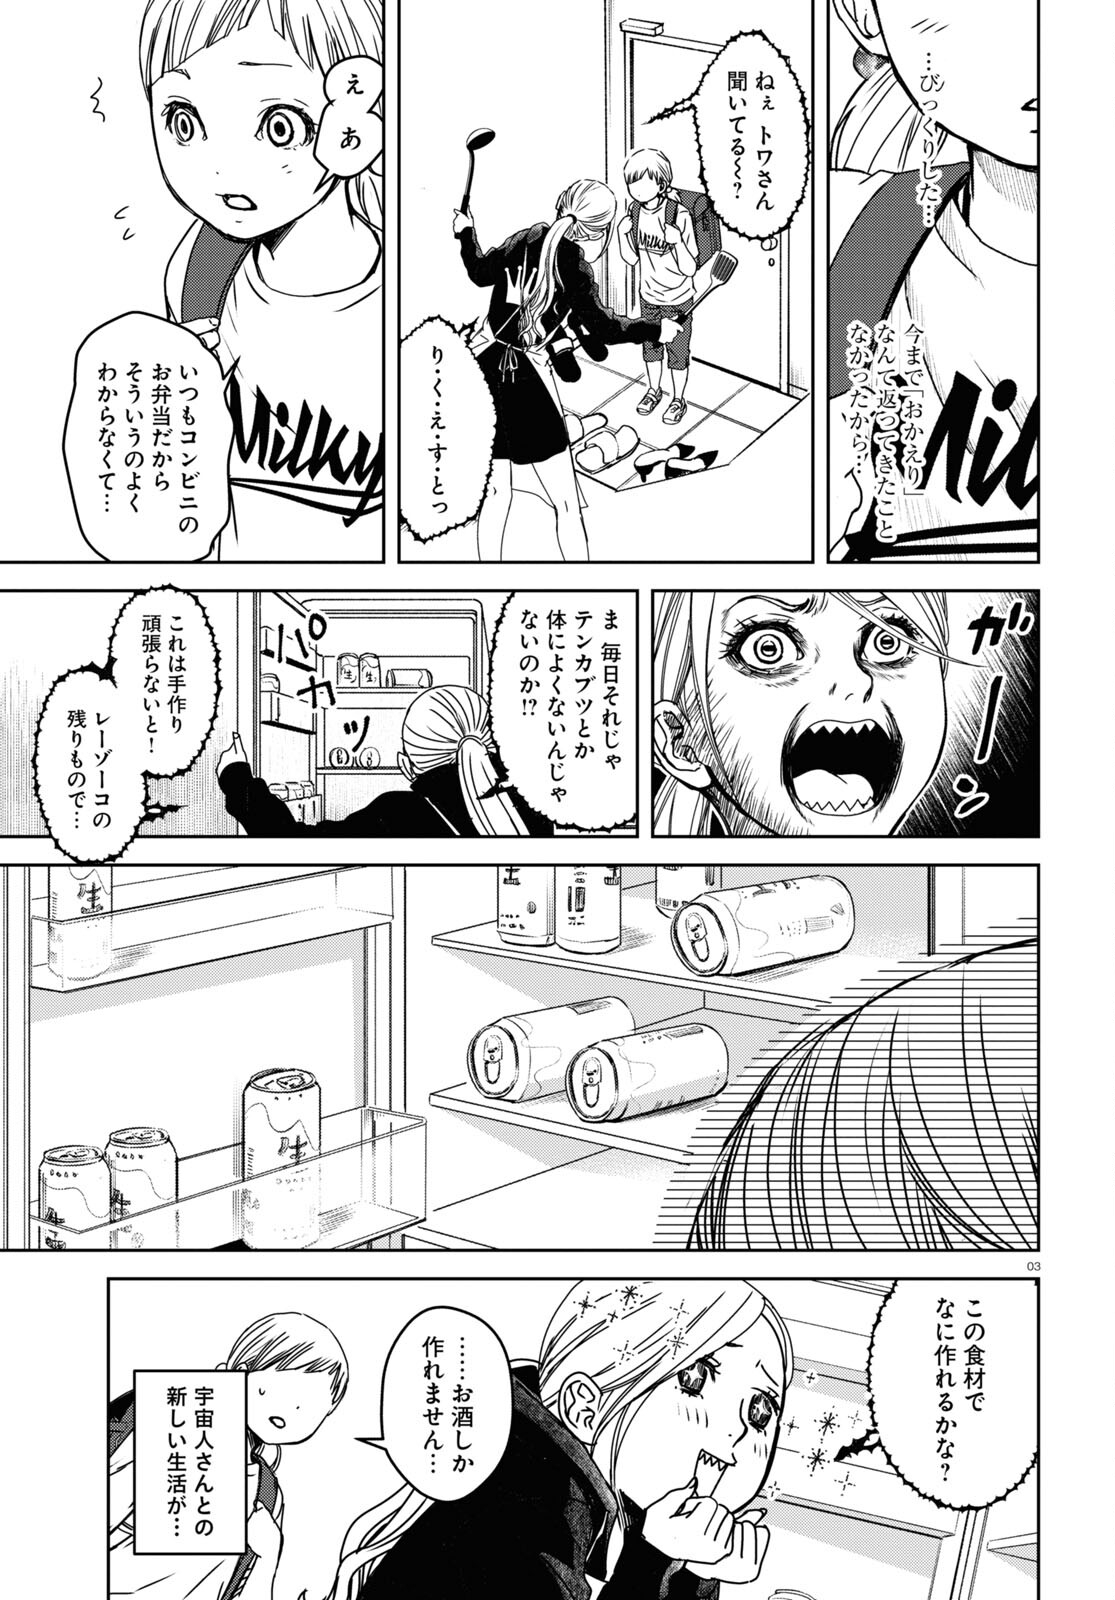 Watashi no Okaa-san (USAYA Mame) - Chapter 3 - Page 3